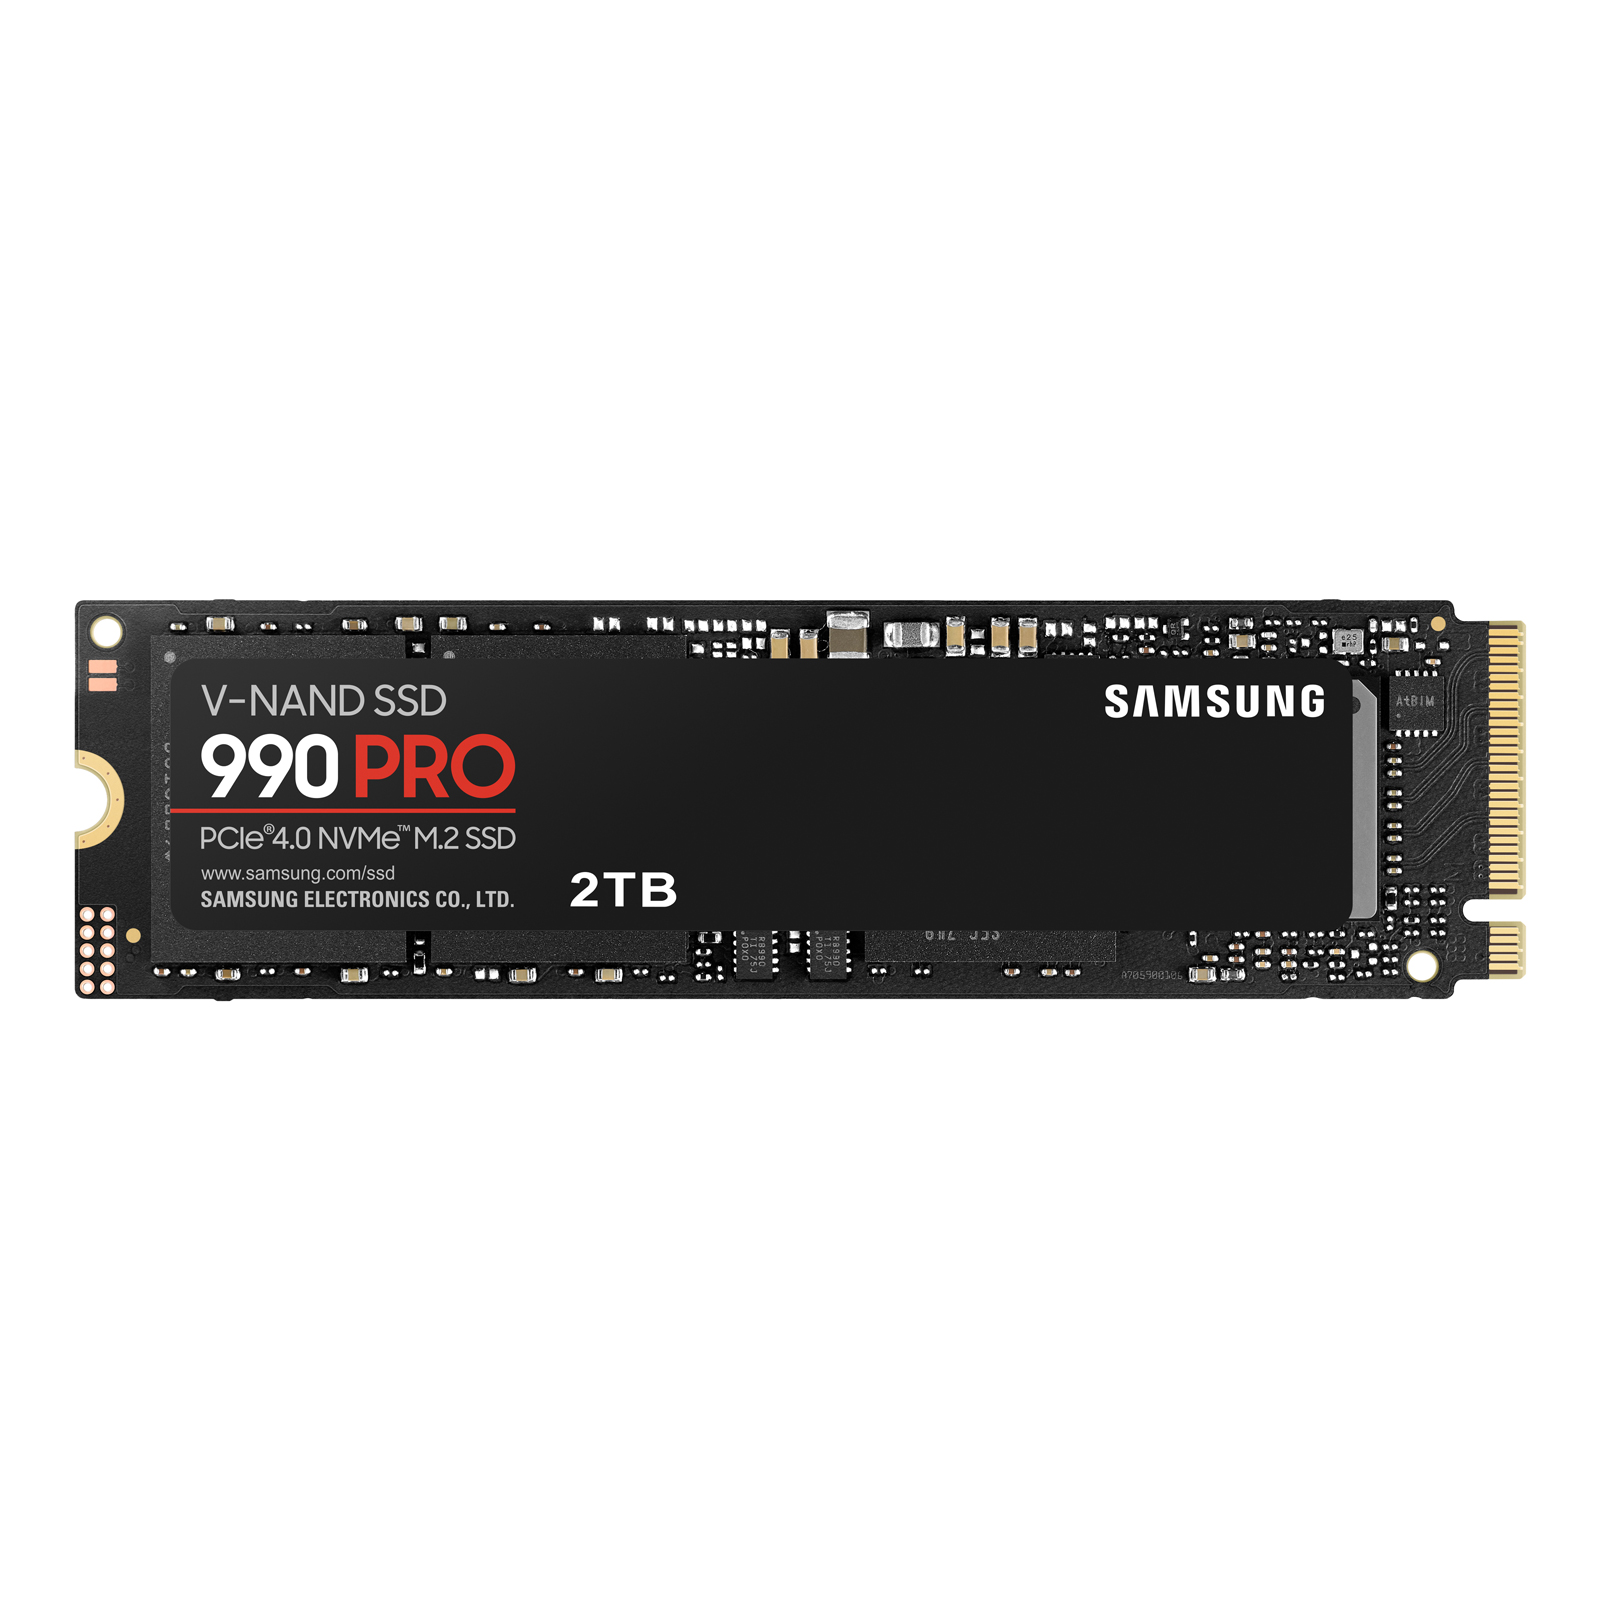 Samsung NVMe M.2 SSD 990 PRO (2TB) | ITGマーケティング - Samsung 